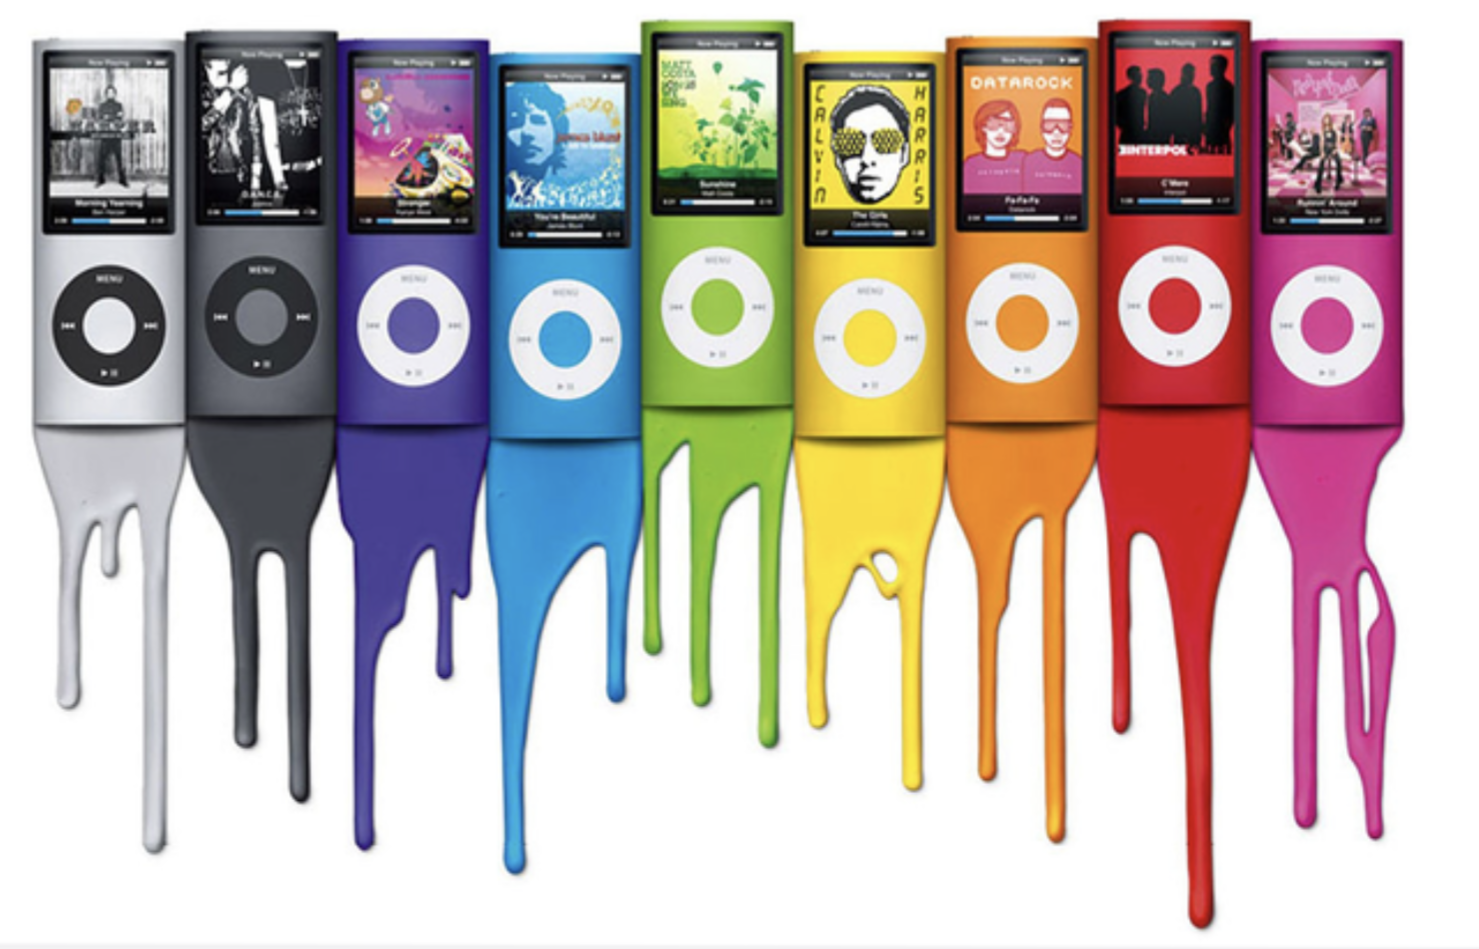 iPod Nano wallpapers fondos de pantalla iphone